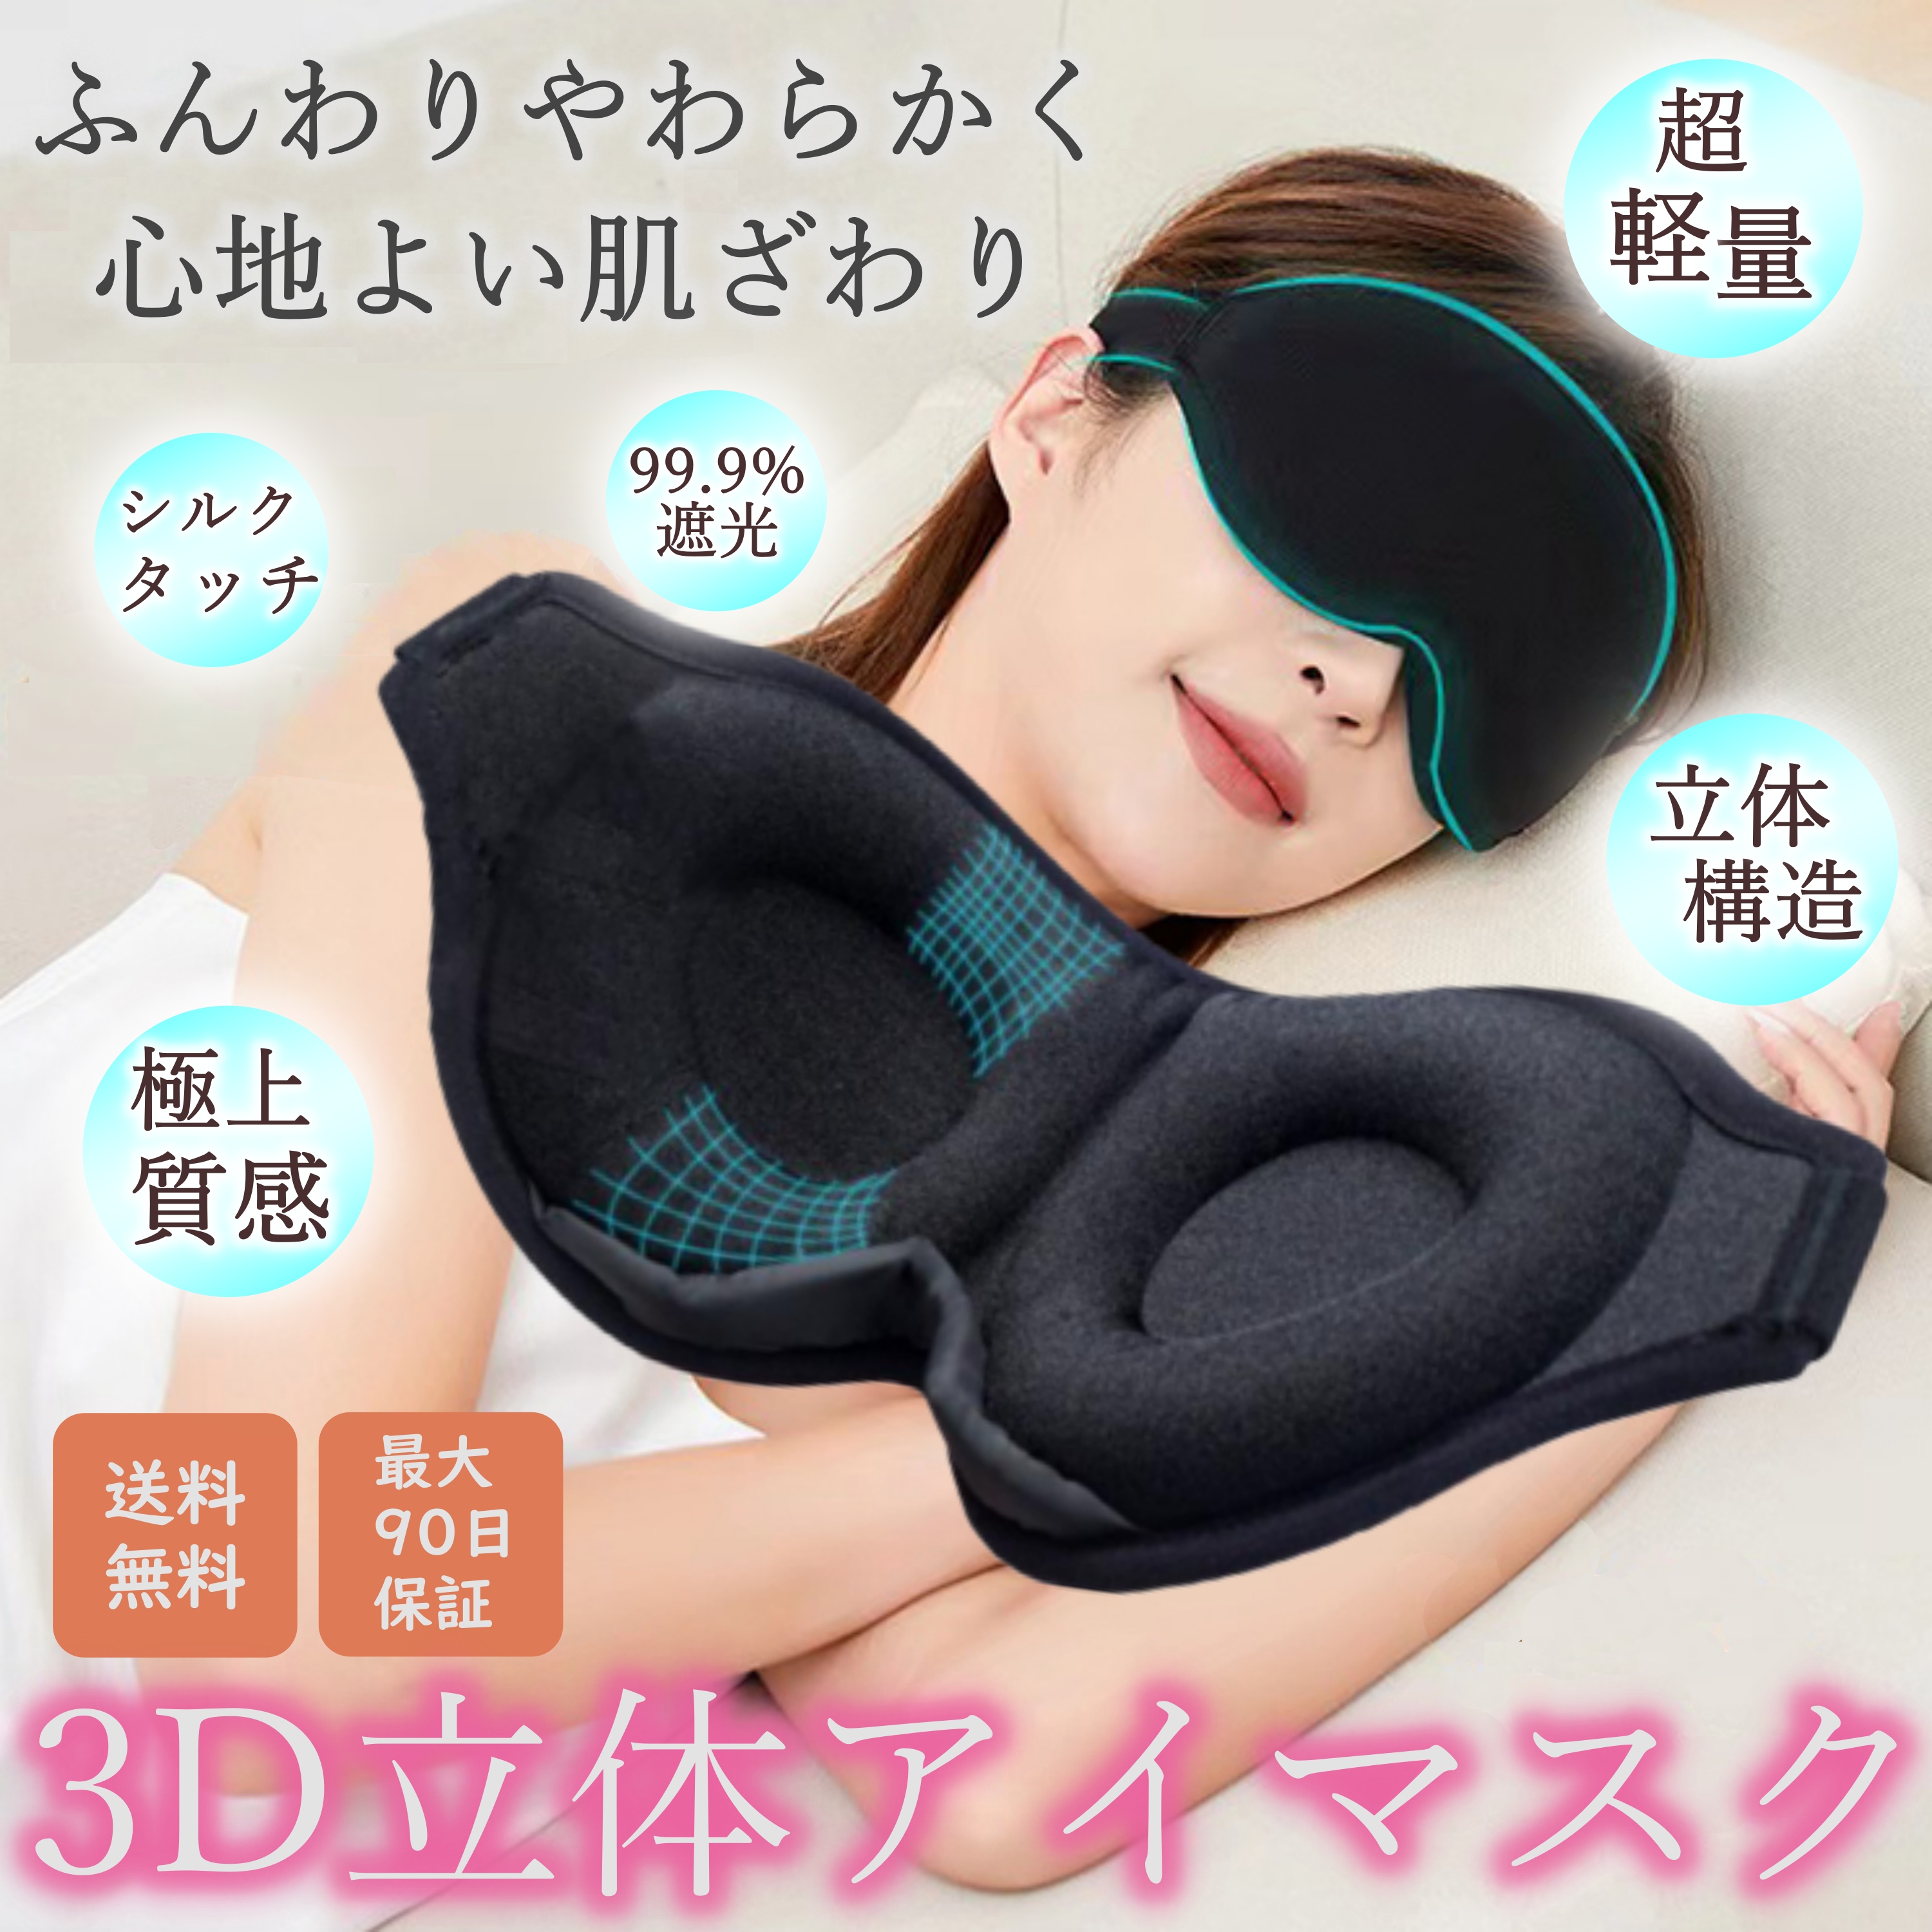 正規認証品!新規格 アイマスク 睡眠 安眠 遮光 3D 立体型 低反発